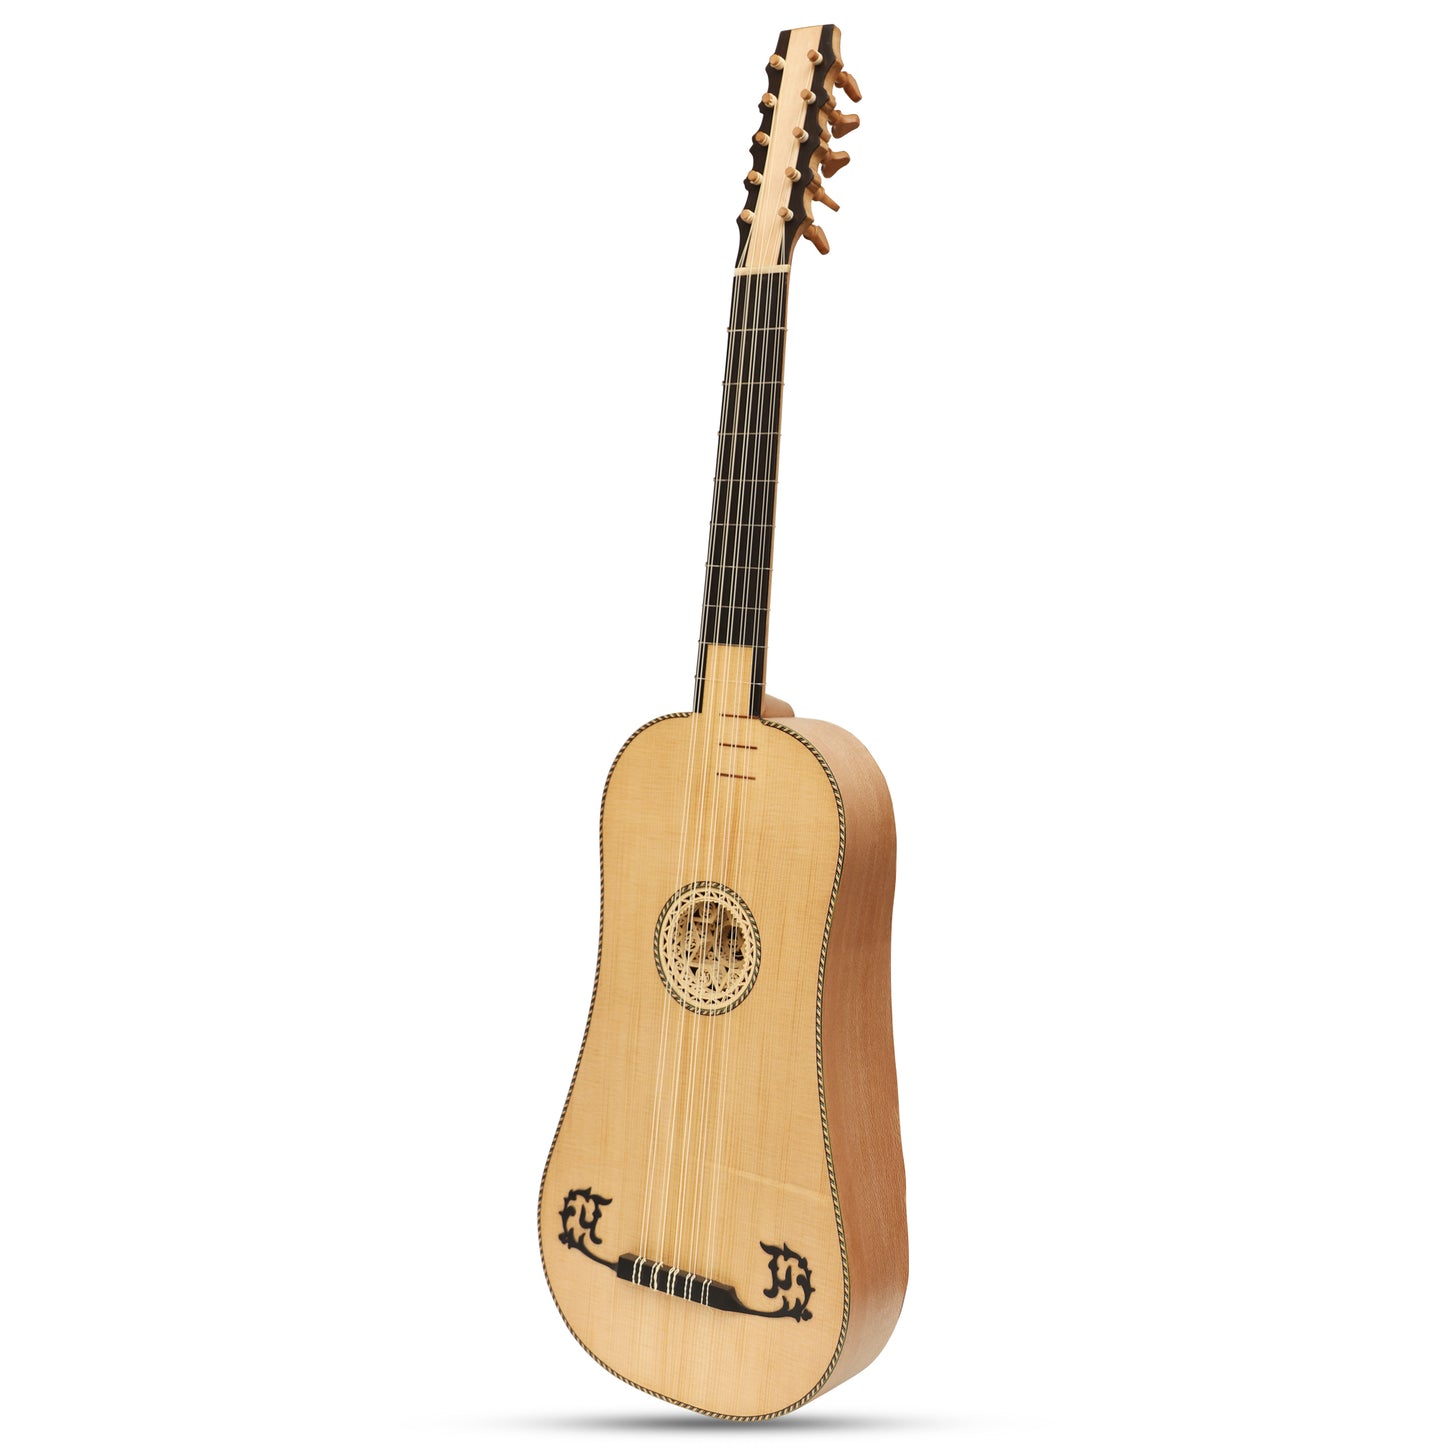 Heartland Sellas Baroque Guitar, 5 Course Lacewood